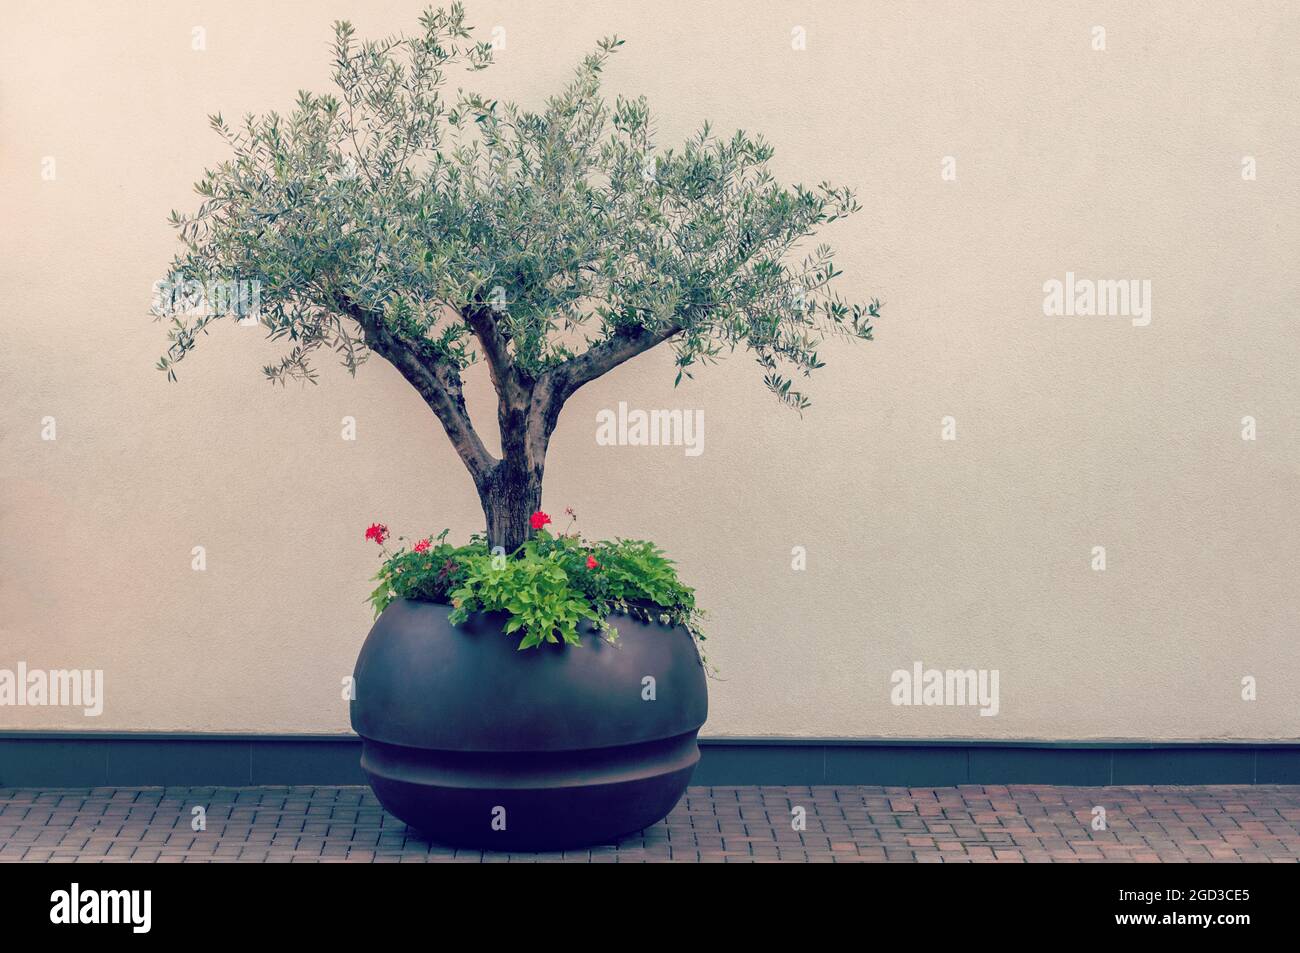 https://c8.alamy.com/comp/2GD3CE5/bonsai-of-a-olive-tree-in-pot-decorative-olive-tree-in-a-planter-pot-2GD3CE5.jpg